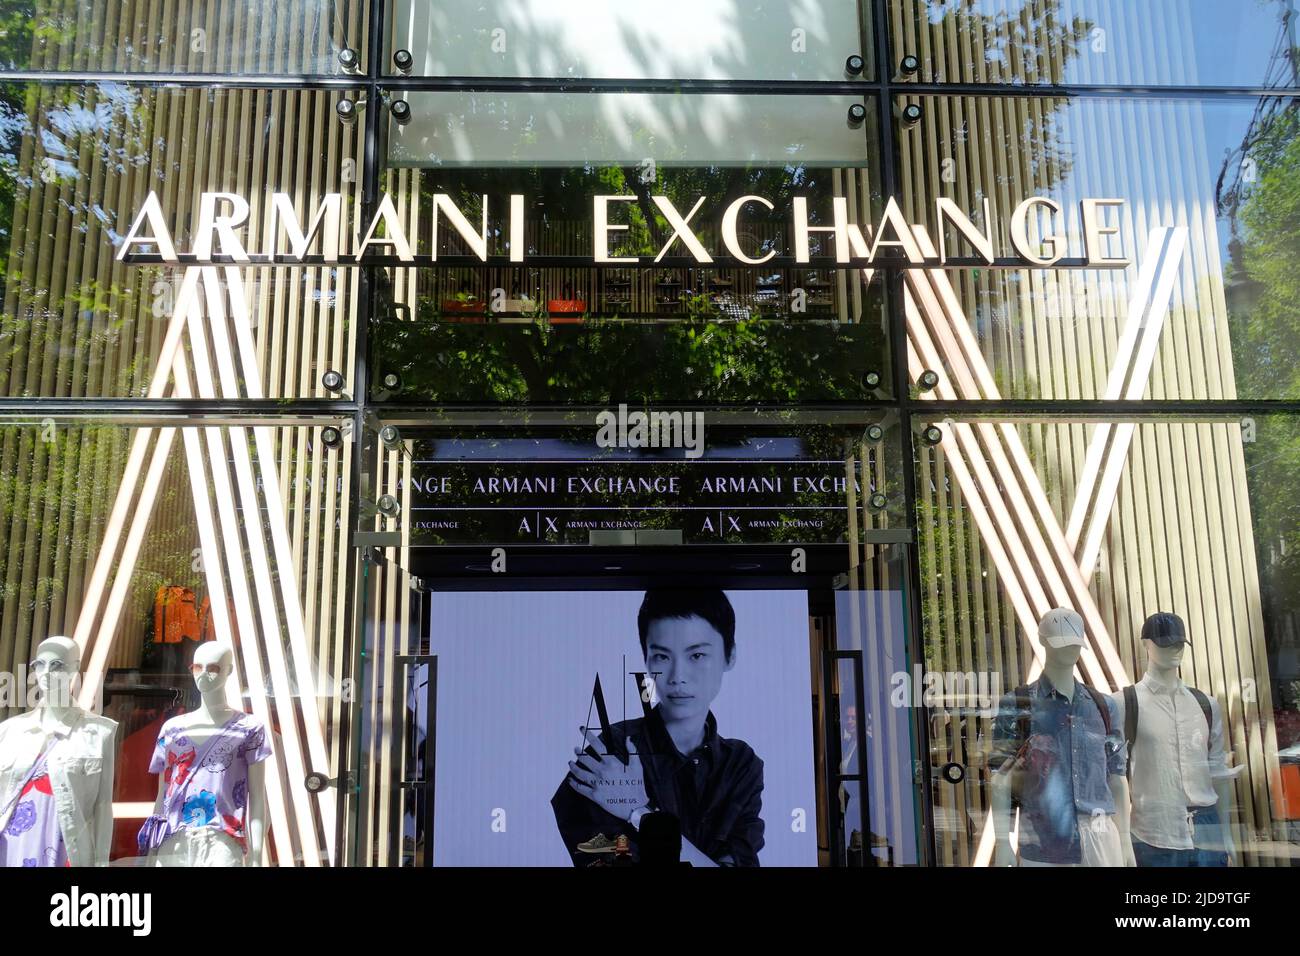 Armani Exchange in Berlin, Germany Stock Photo - Alamy